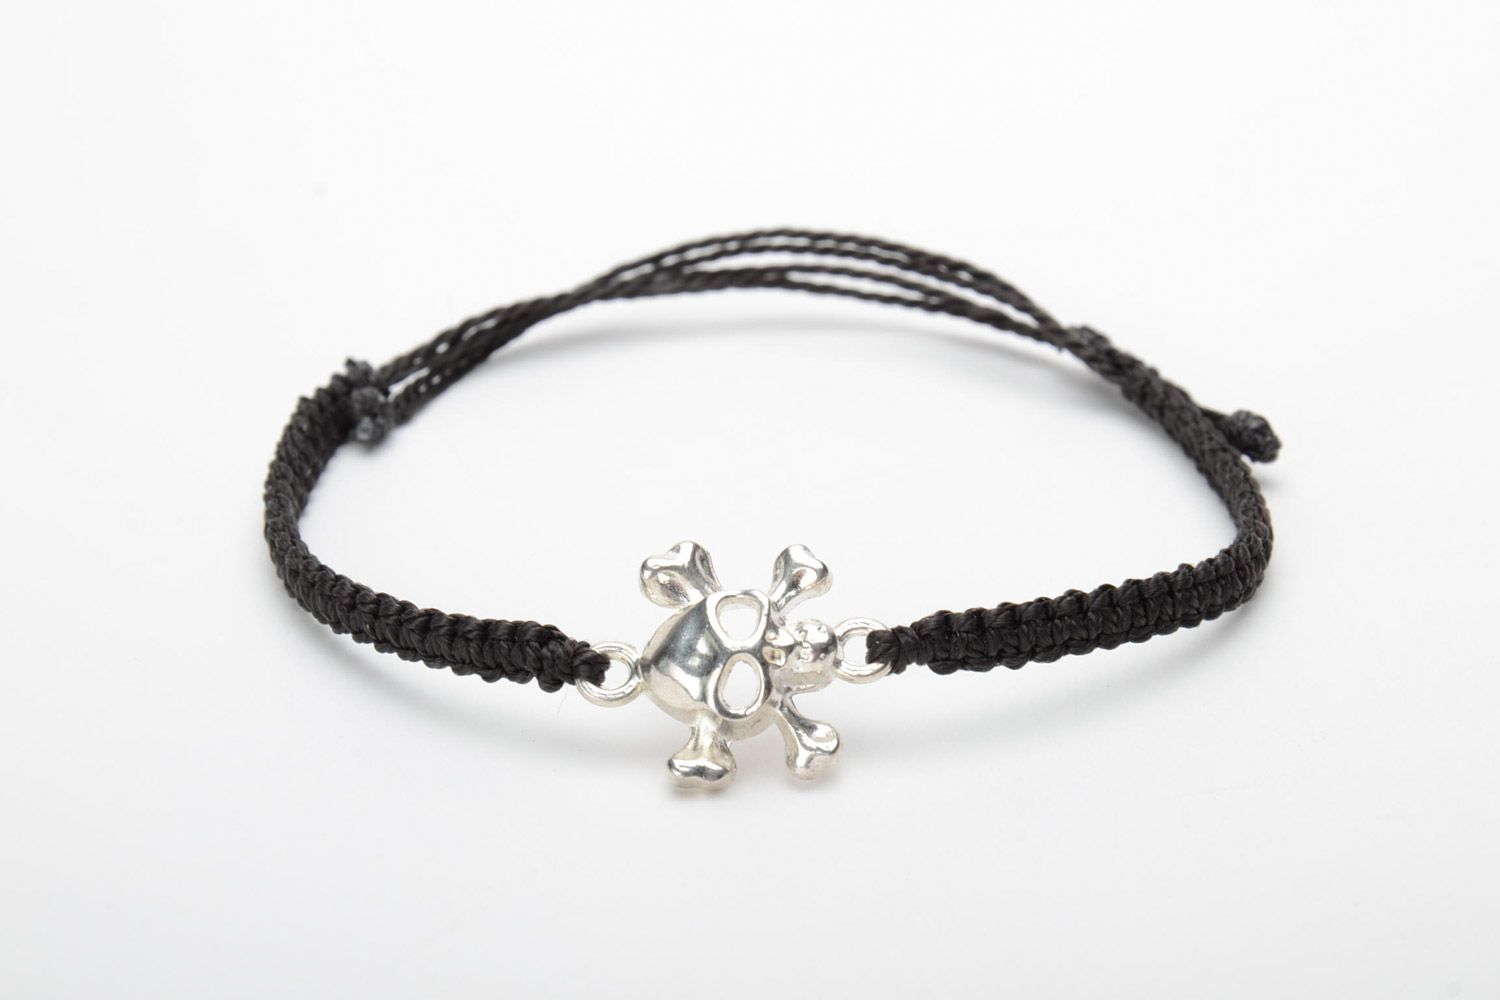 Handmade black woven capron thread wrist bracelet with metal charm in the shape of skull photo 5